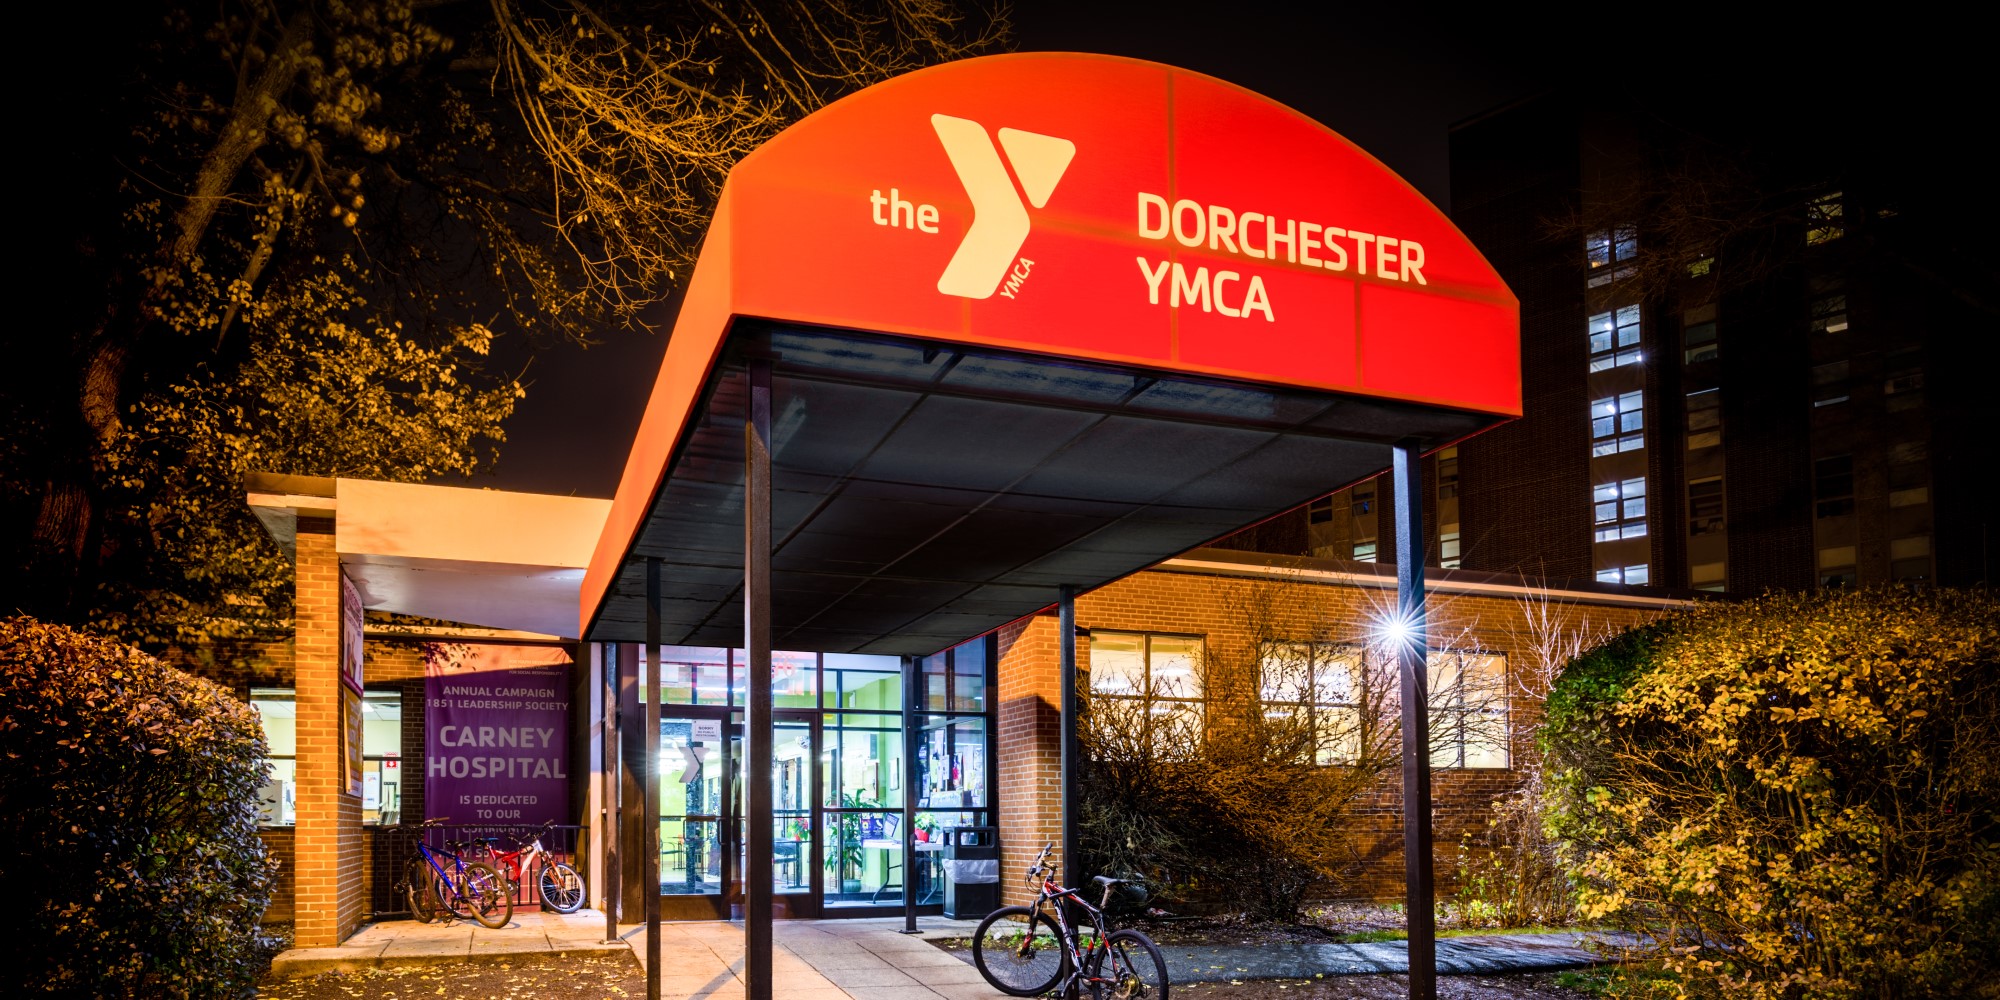 Dorchester YMCA